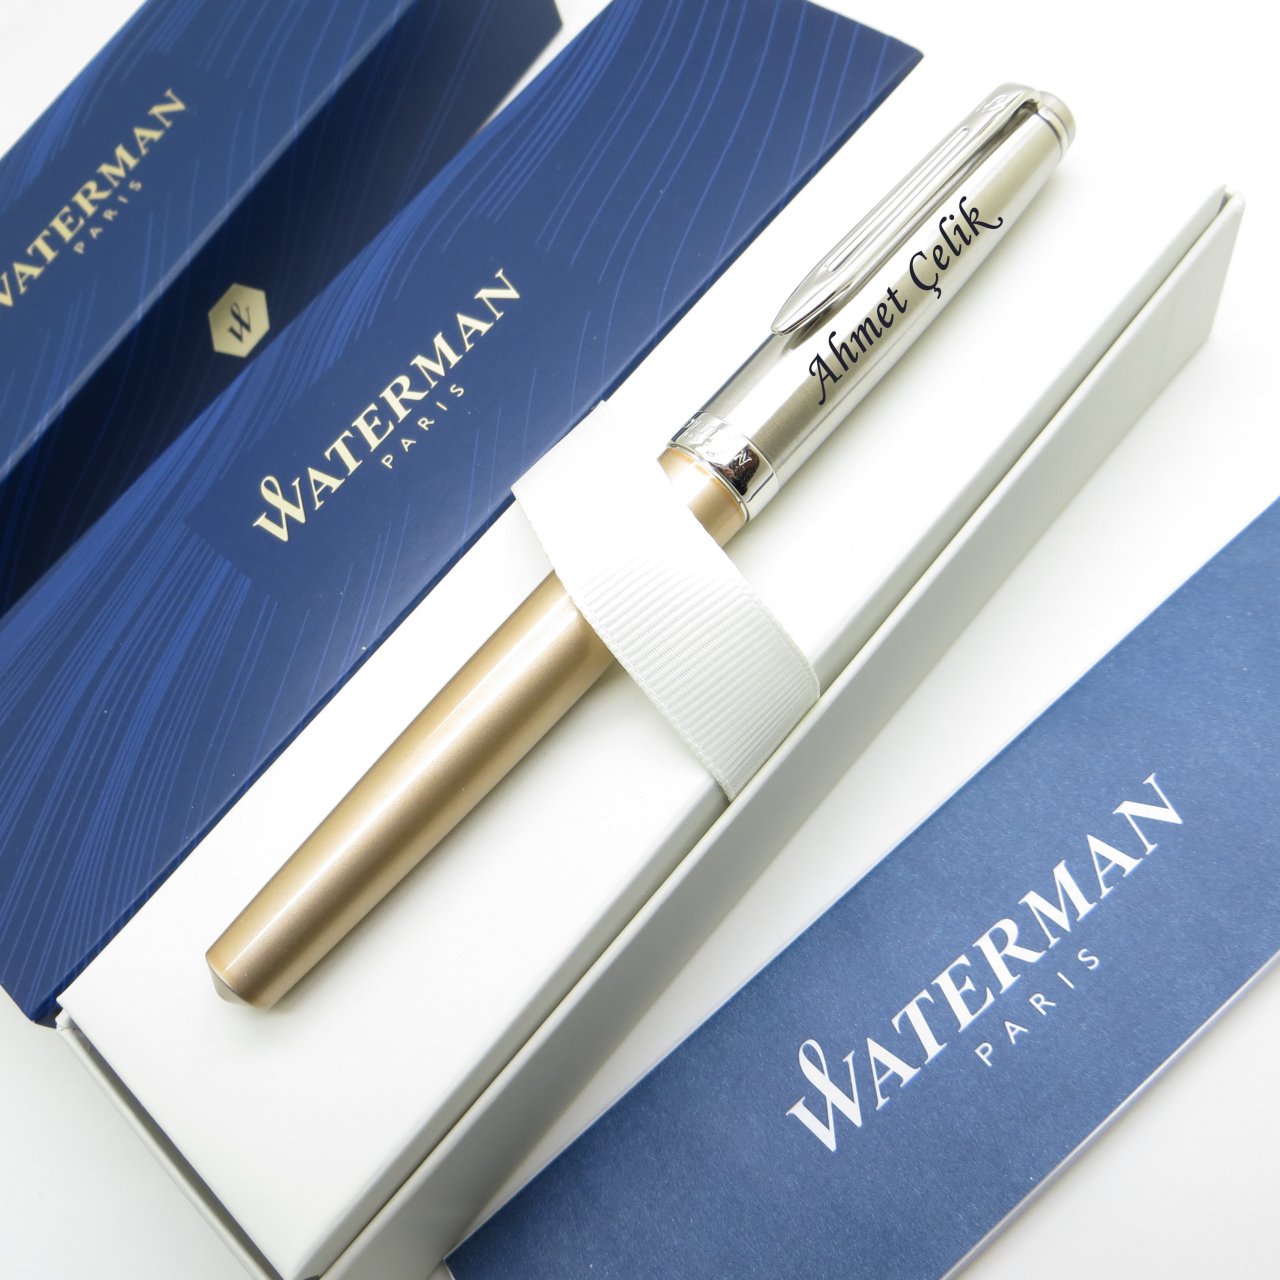 Waterman Embleme Deluxe Altın CT Roller Kalem | İsme Özel Kalem | Hediye Kalem